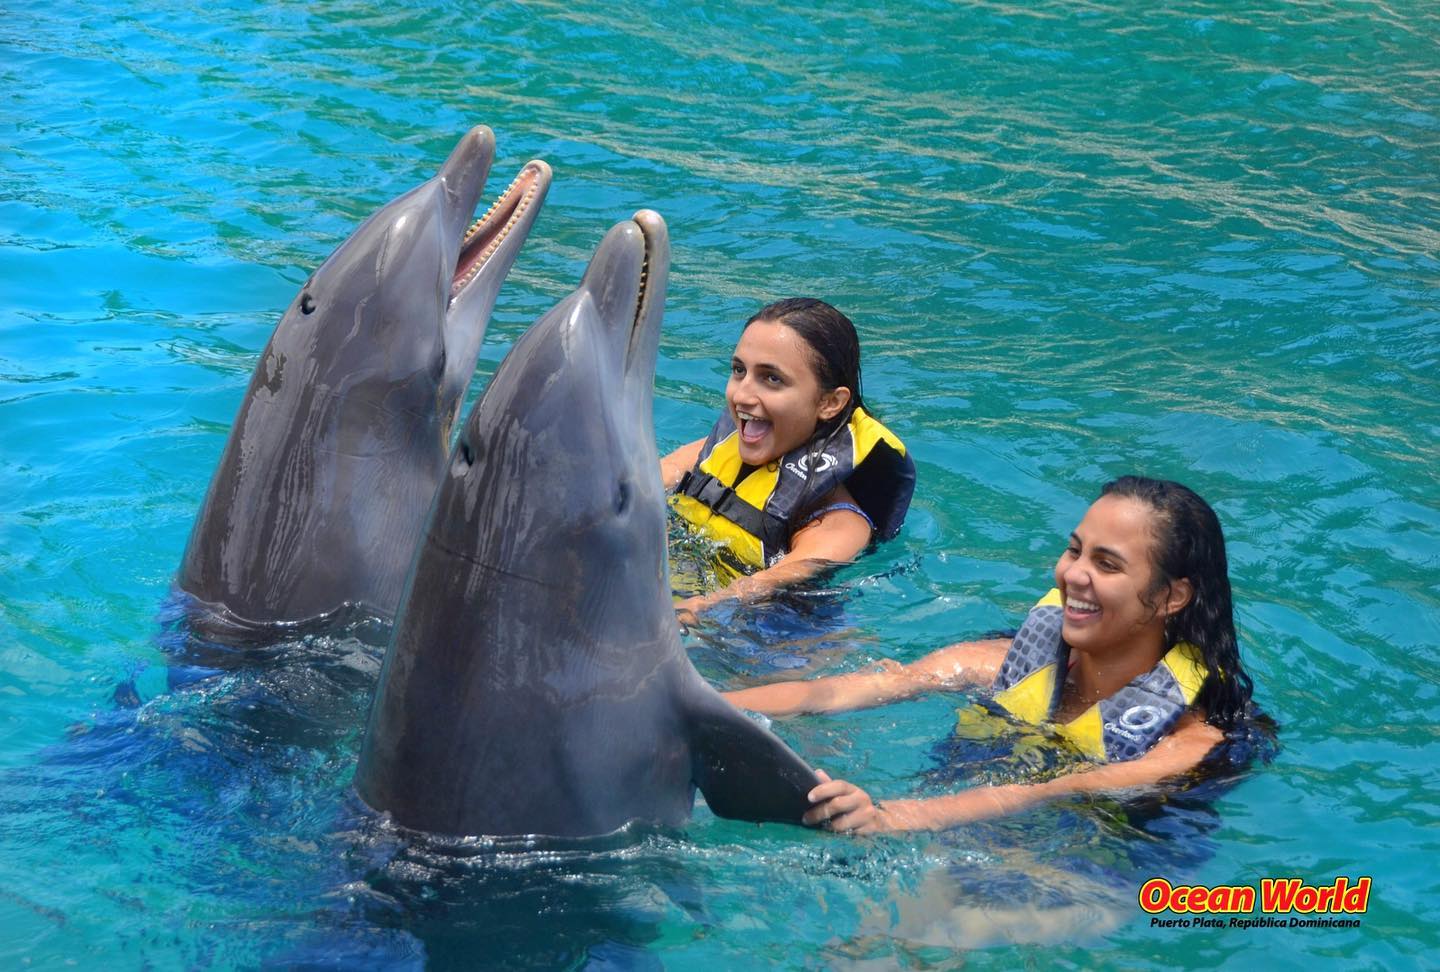 Dolphin show at Ocean World, Cofresi